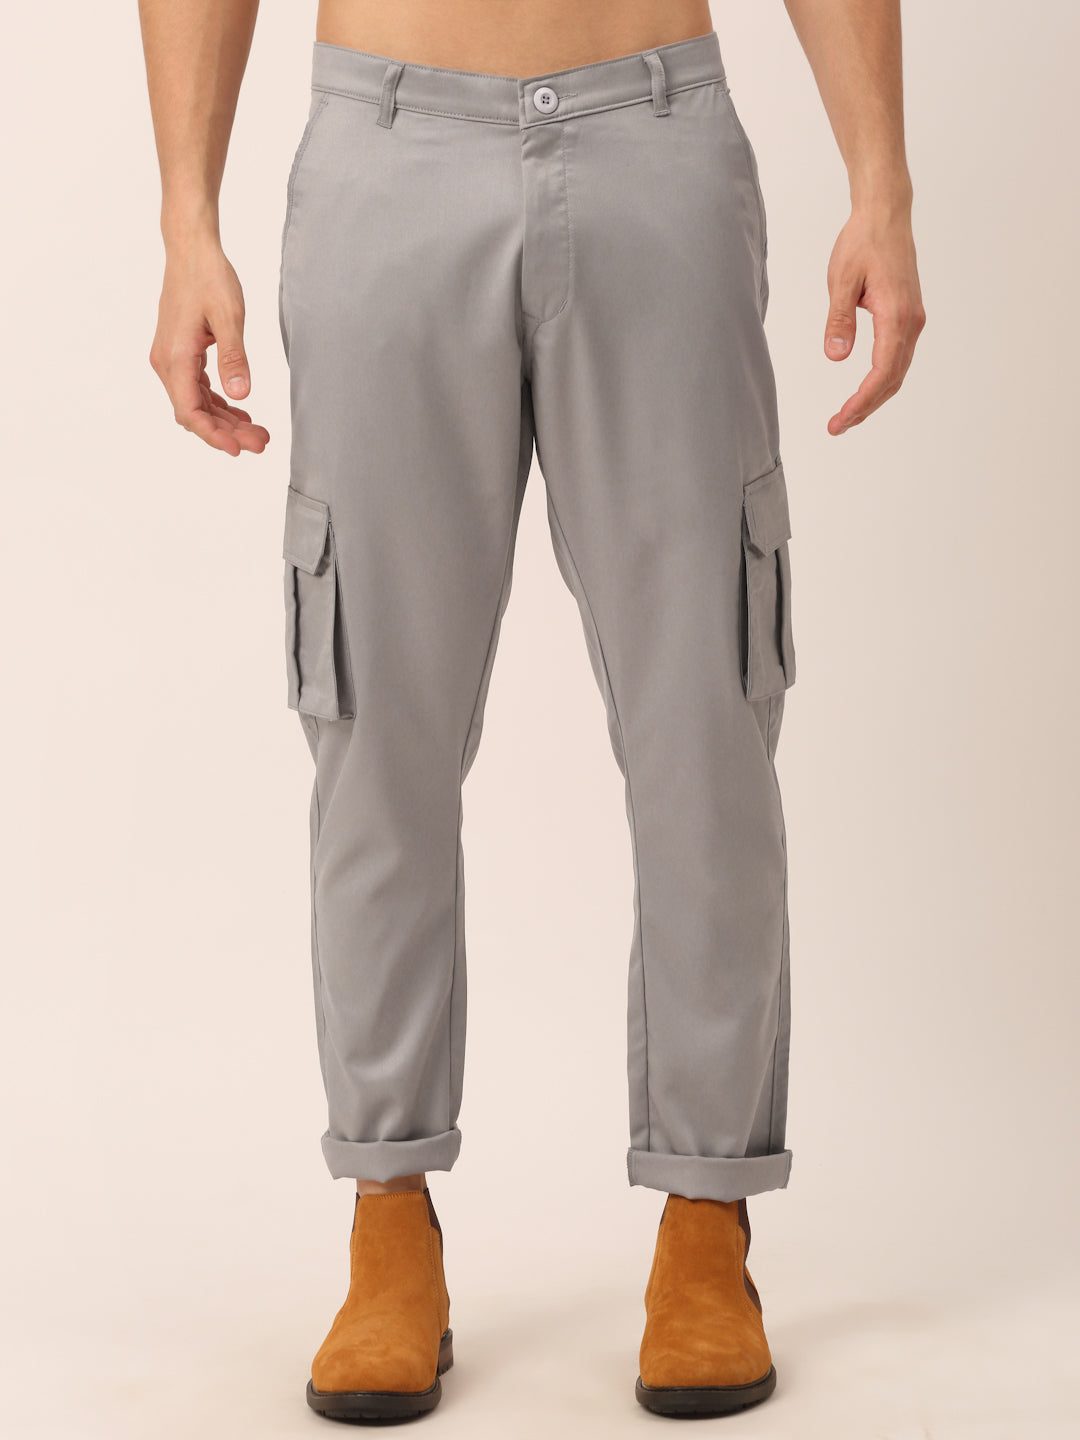 Denim Leg Trousers | Men Denim Joggers | Denim Cargo Pants | Cargo Pants Men  - Fashion - Aliexpress